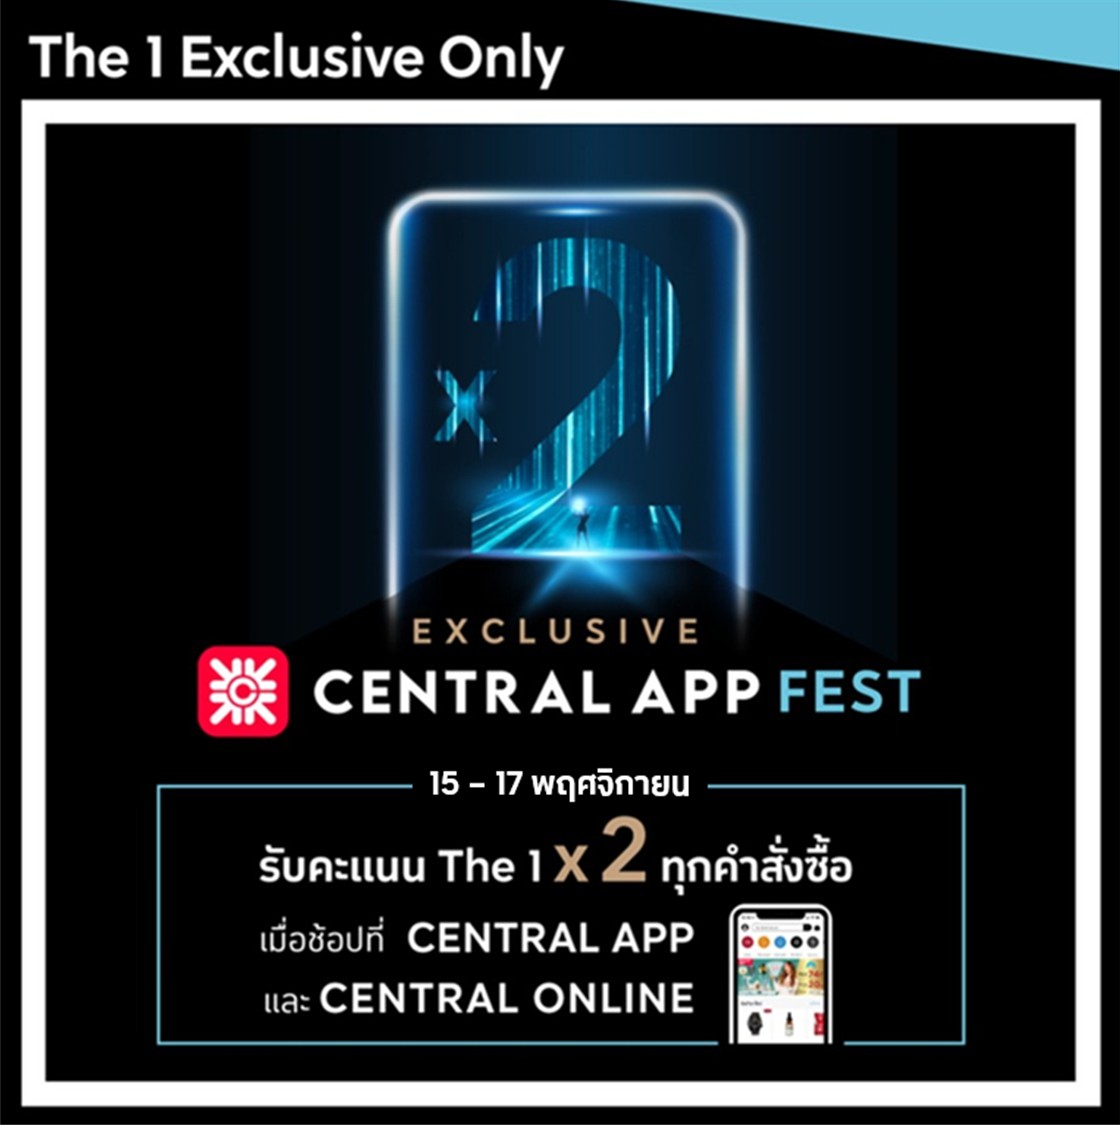 The 1 Central App Fest